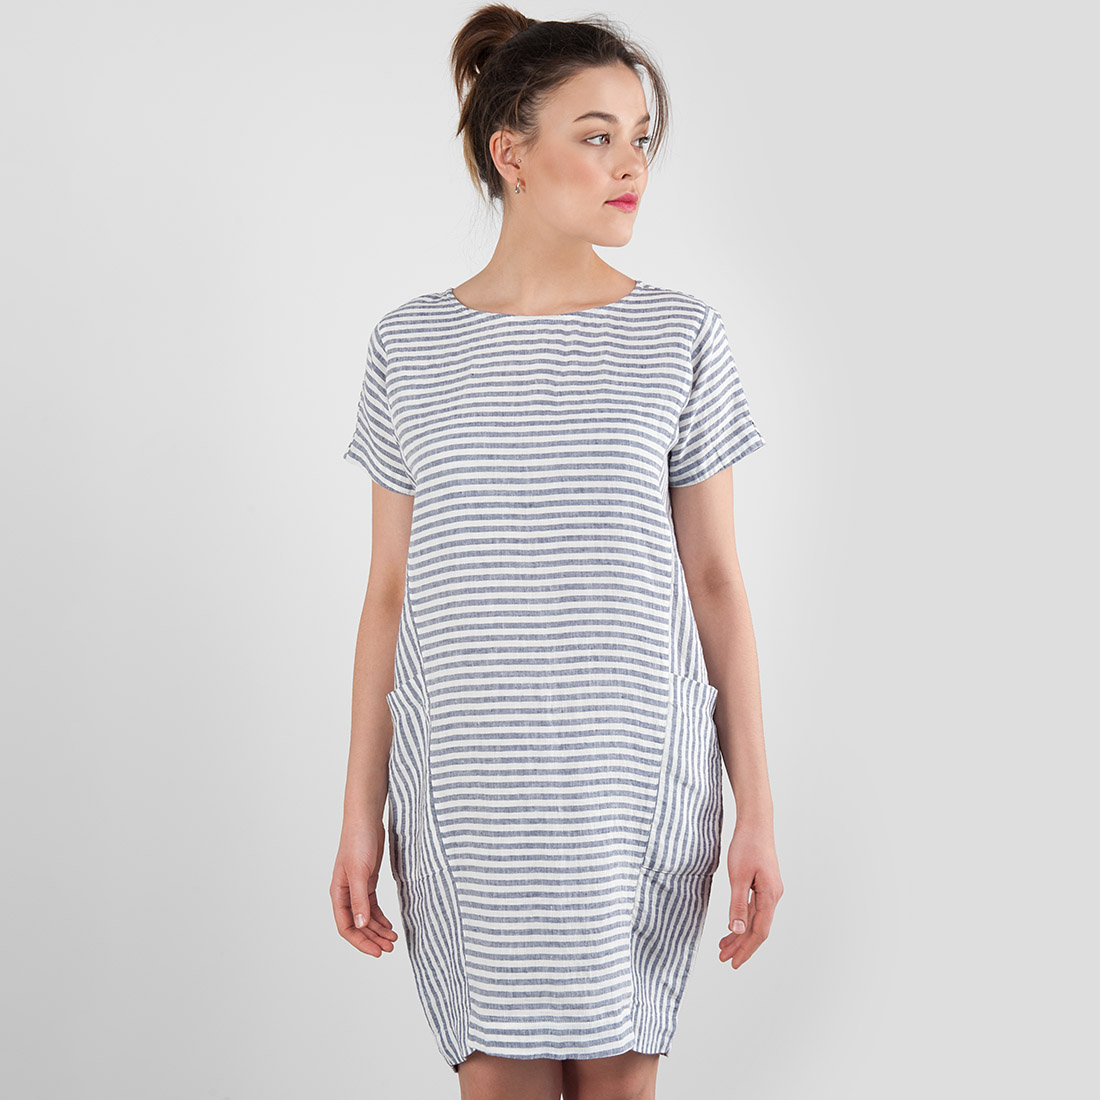 Linen dress in blue - white stripes, short. Manufacturer: AB “Siulas”